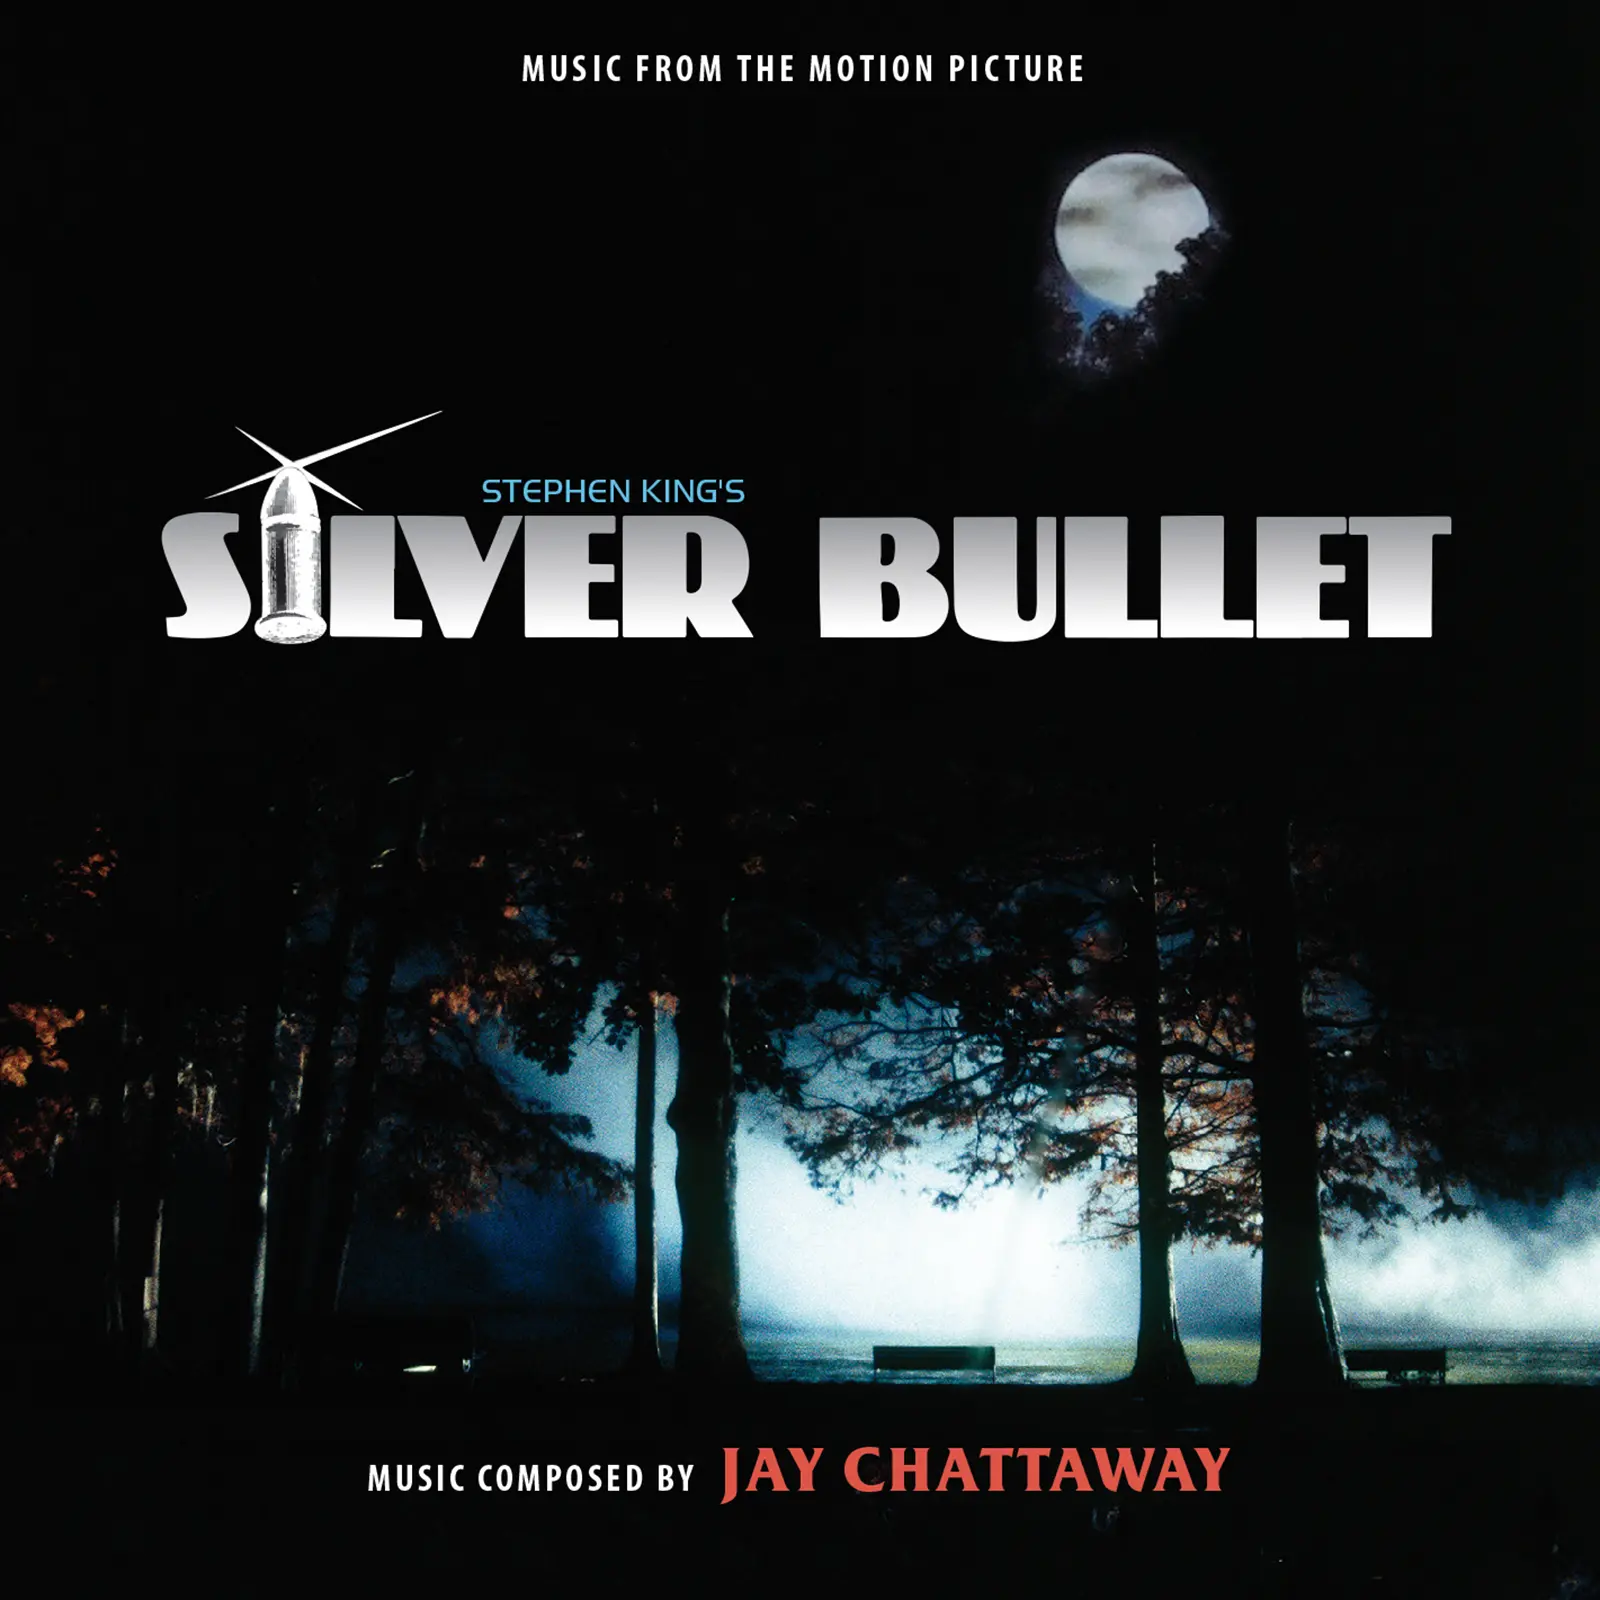 Silverbullet Soundtrack Expanded 01